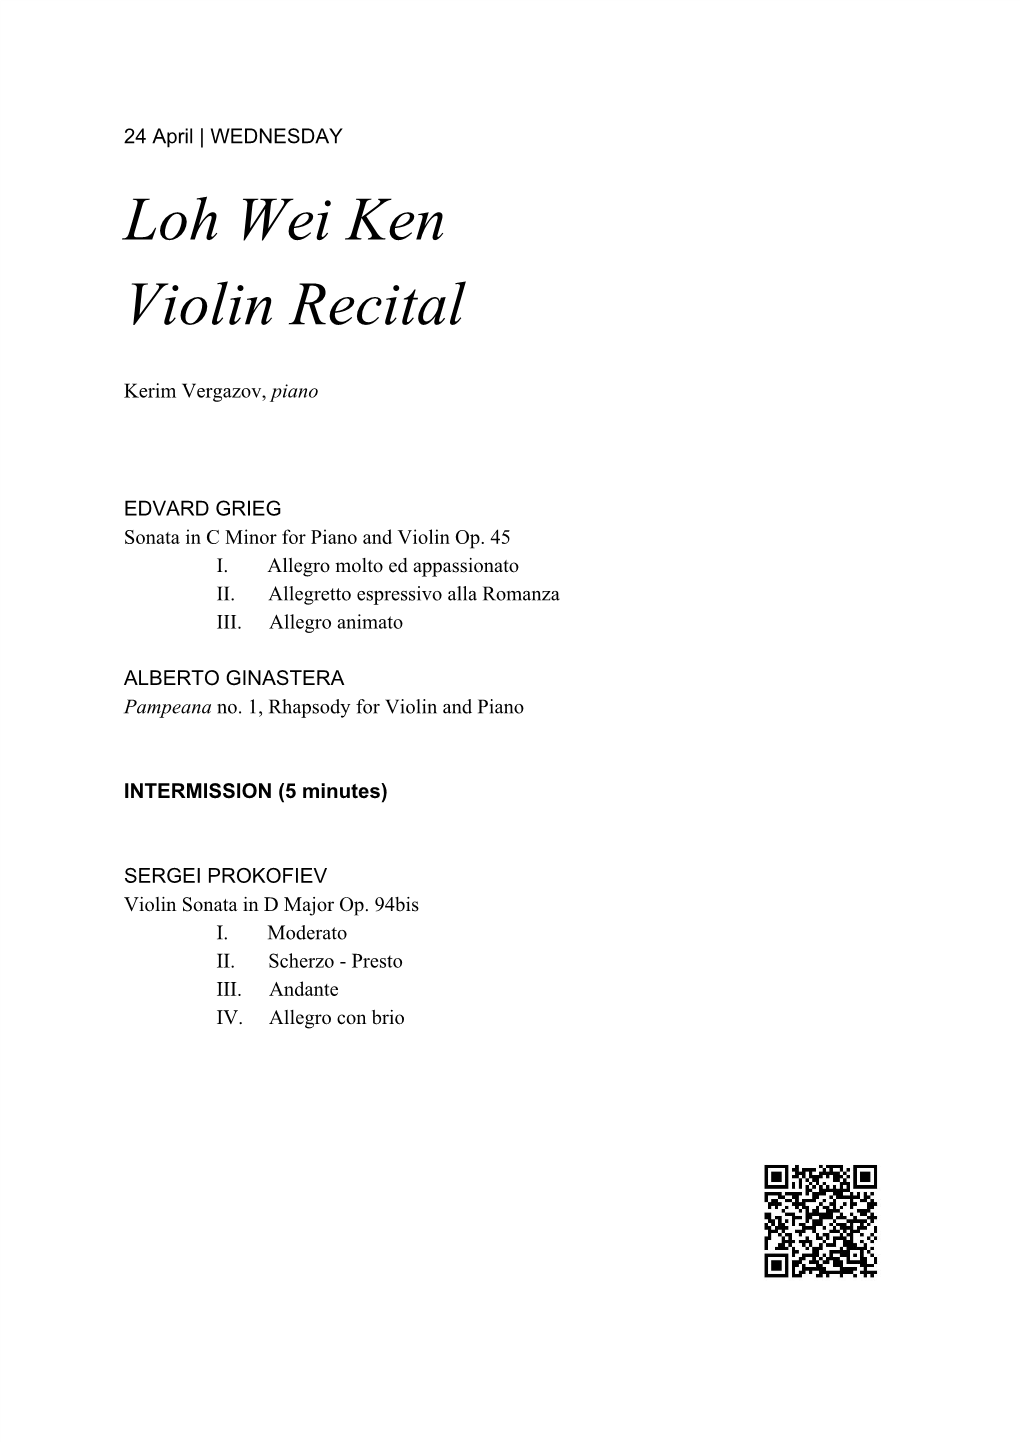 Loh Wei Ken Violin Recital